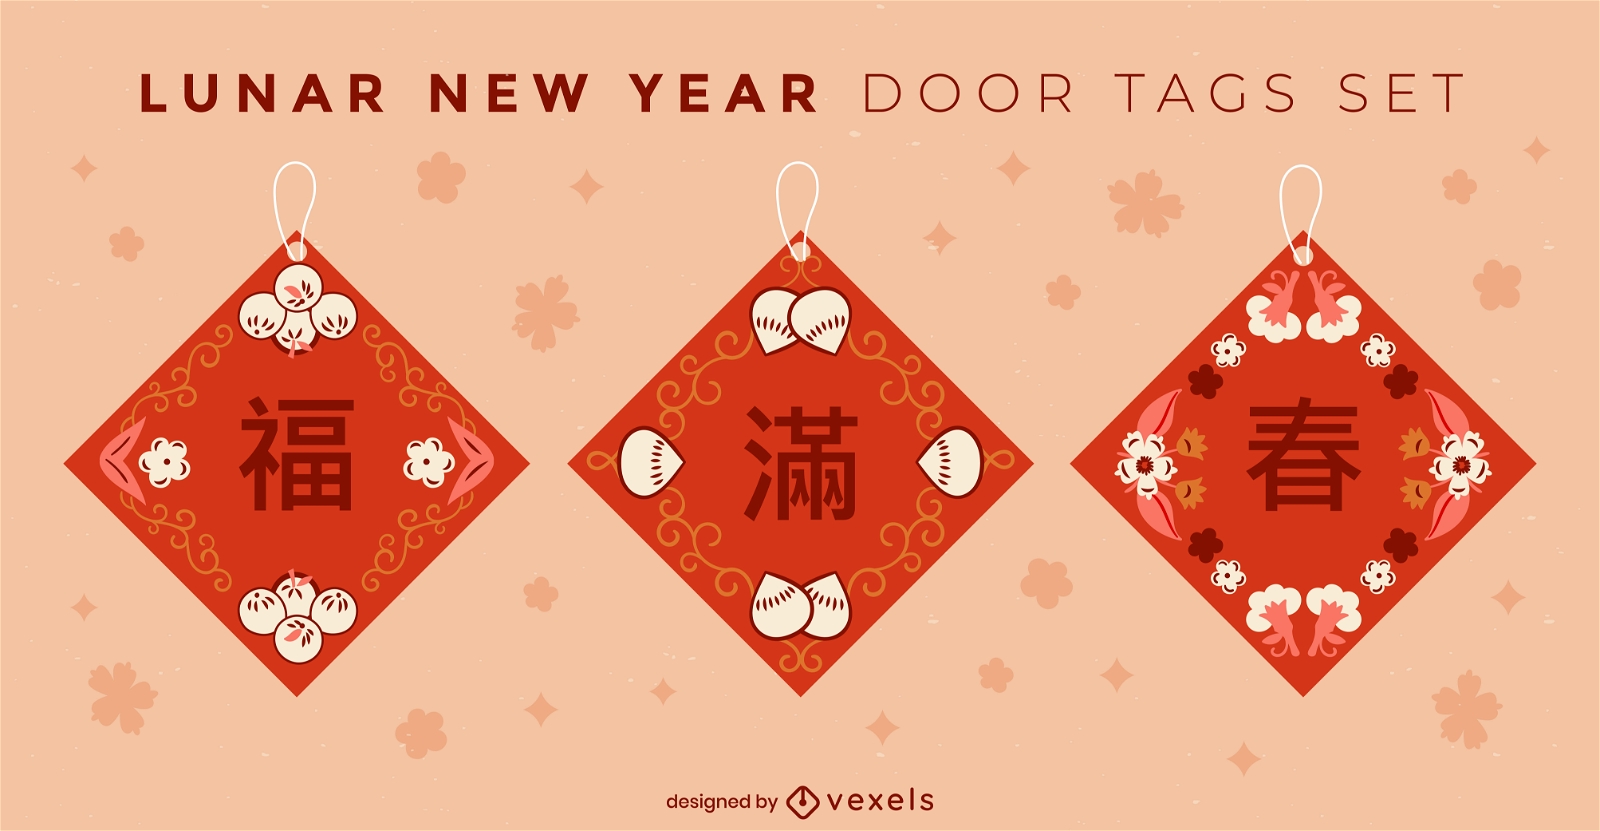 Lunar New Year Door Tags Set